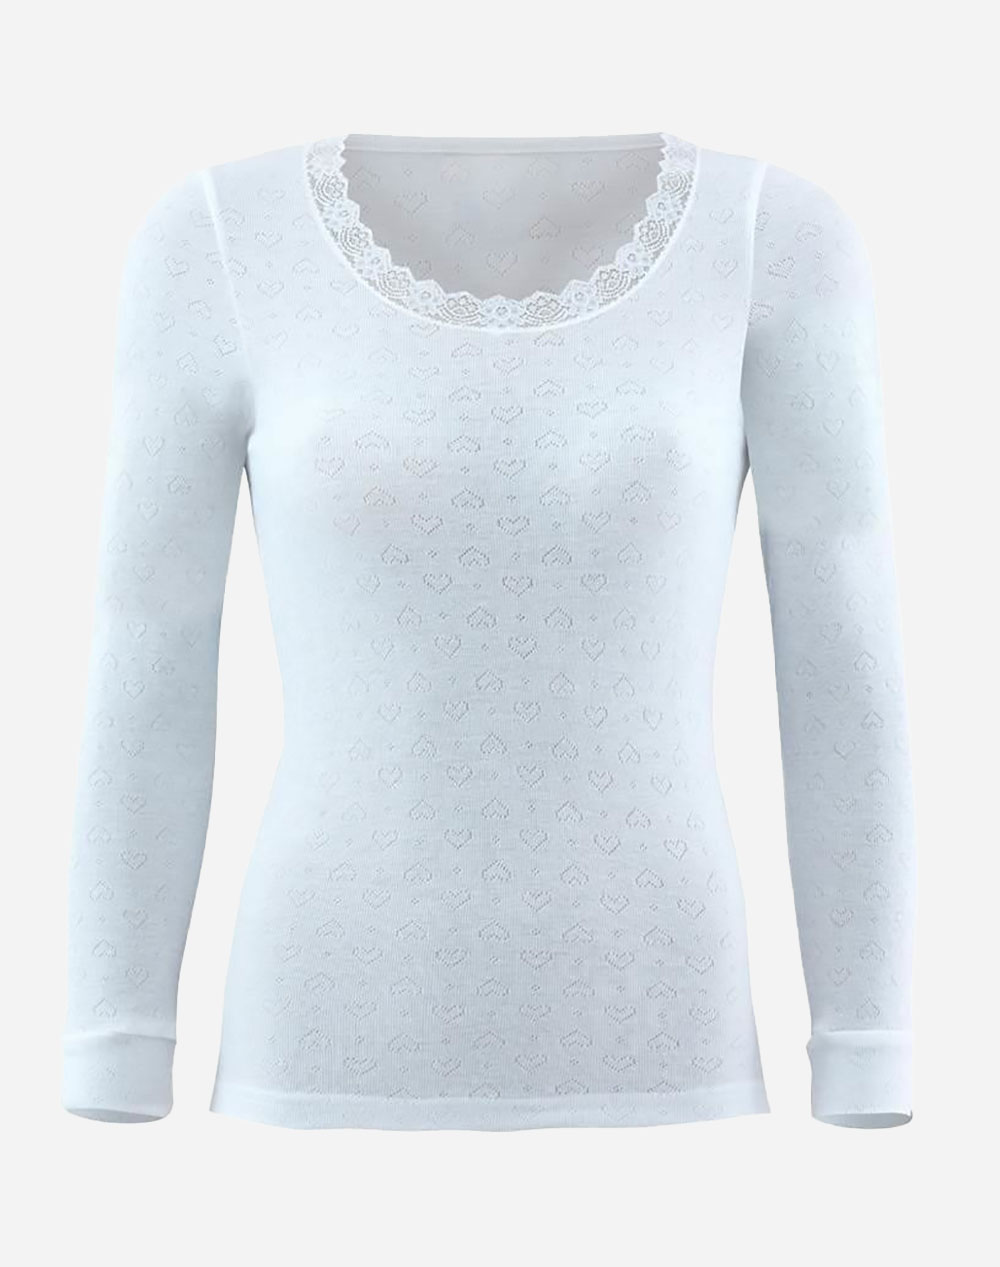 BLACKSPADE Thermal All Seasons Women T-Shirt Long Slv 1268 14.01.39.006-Snow White White